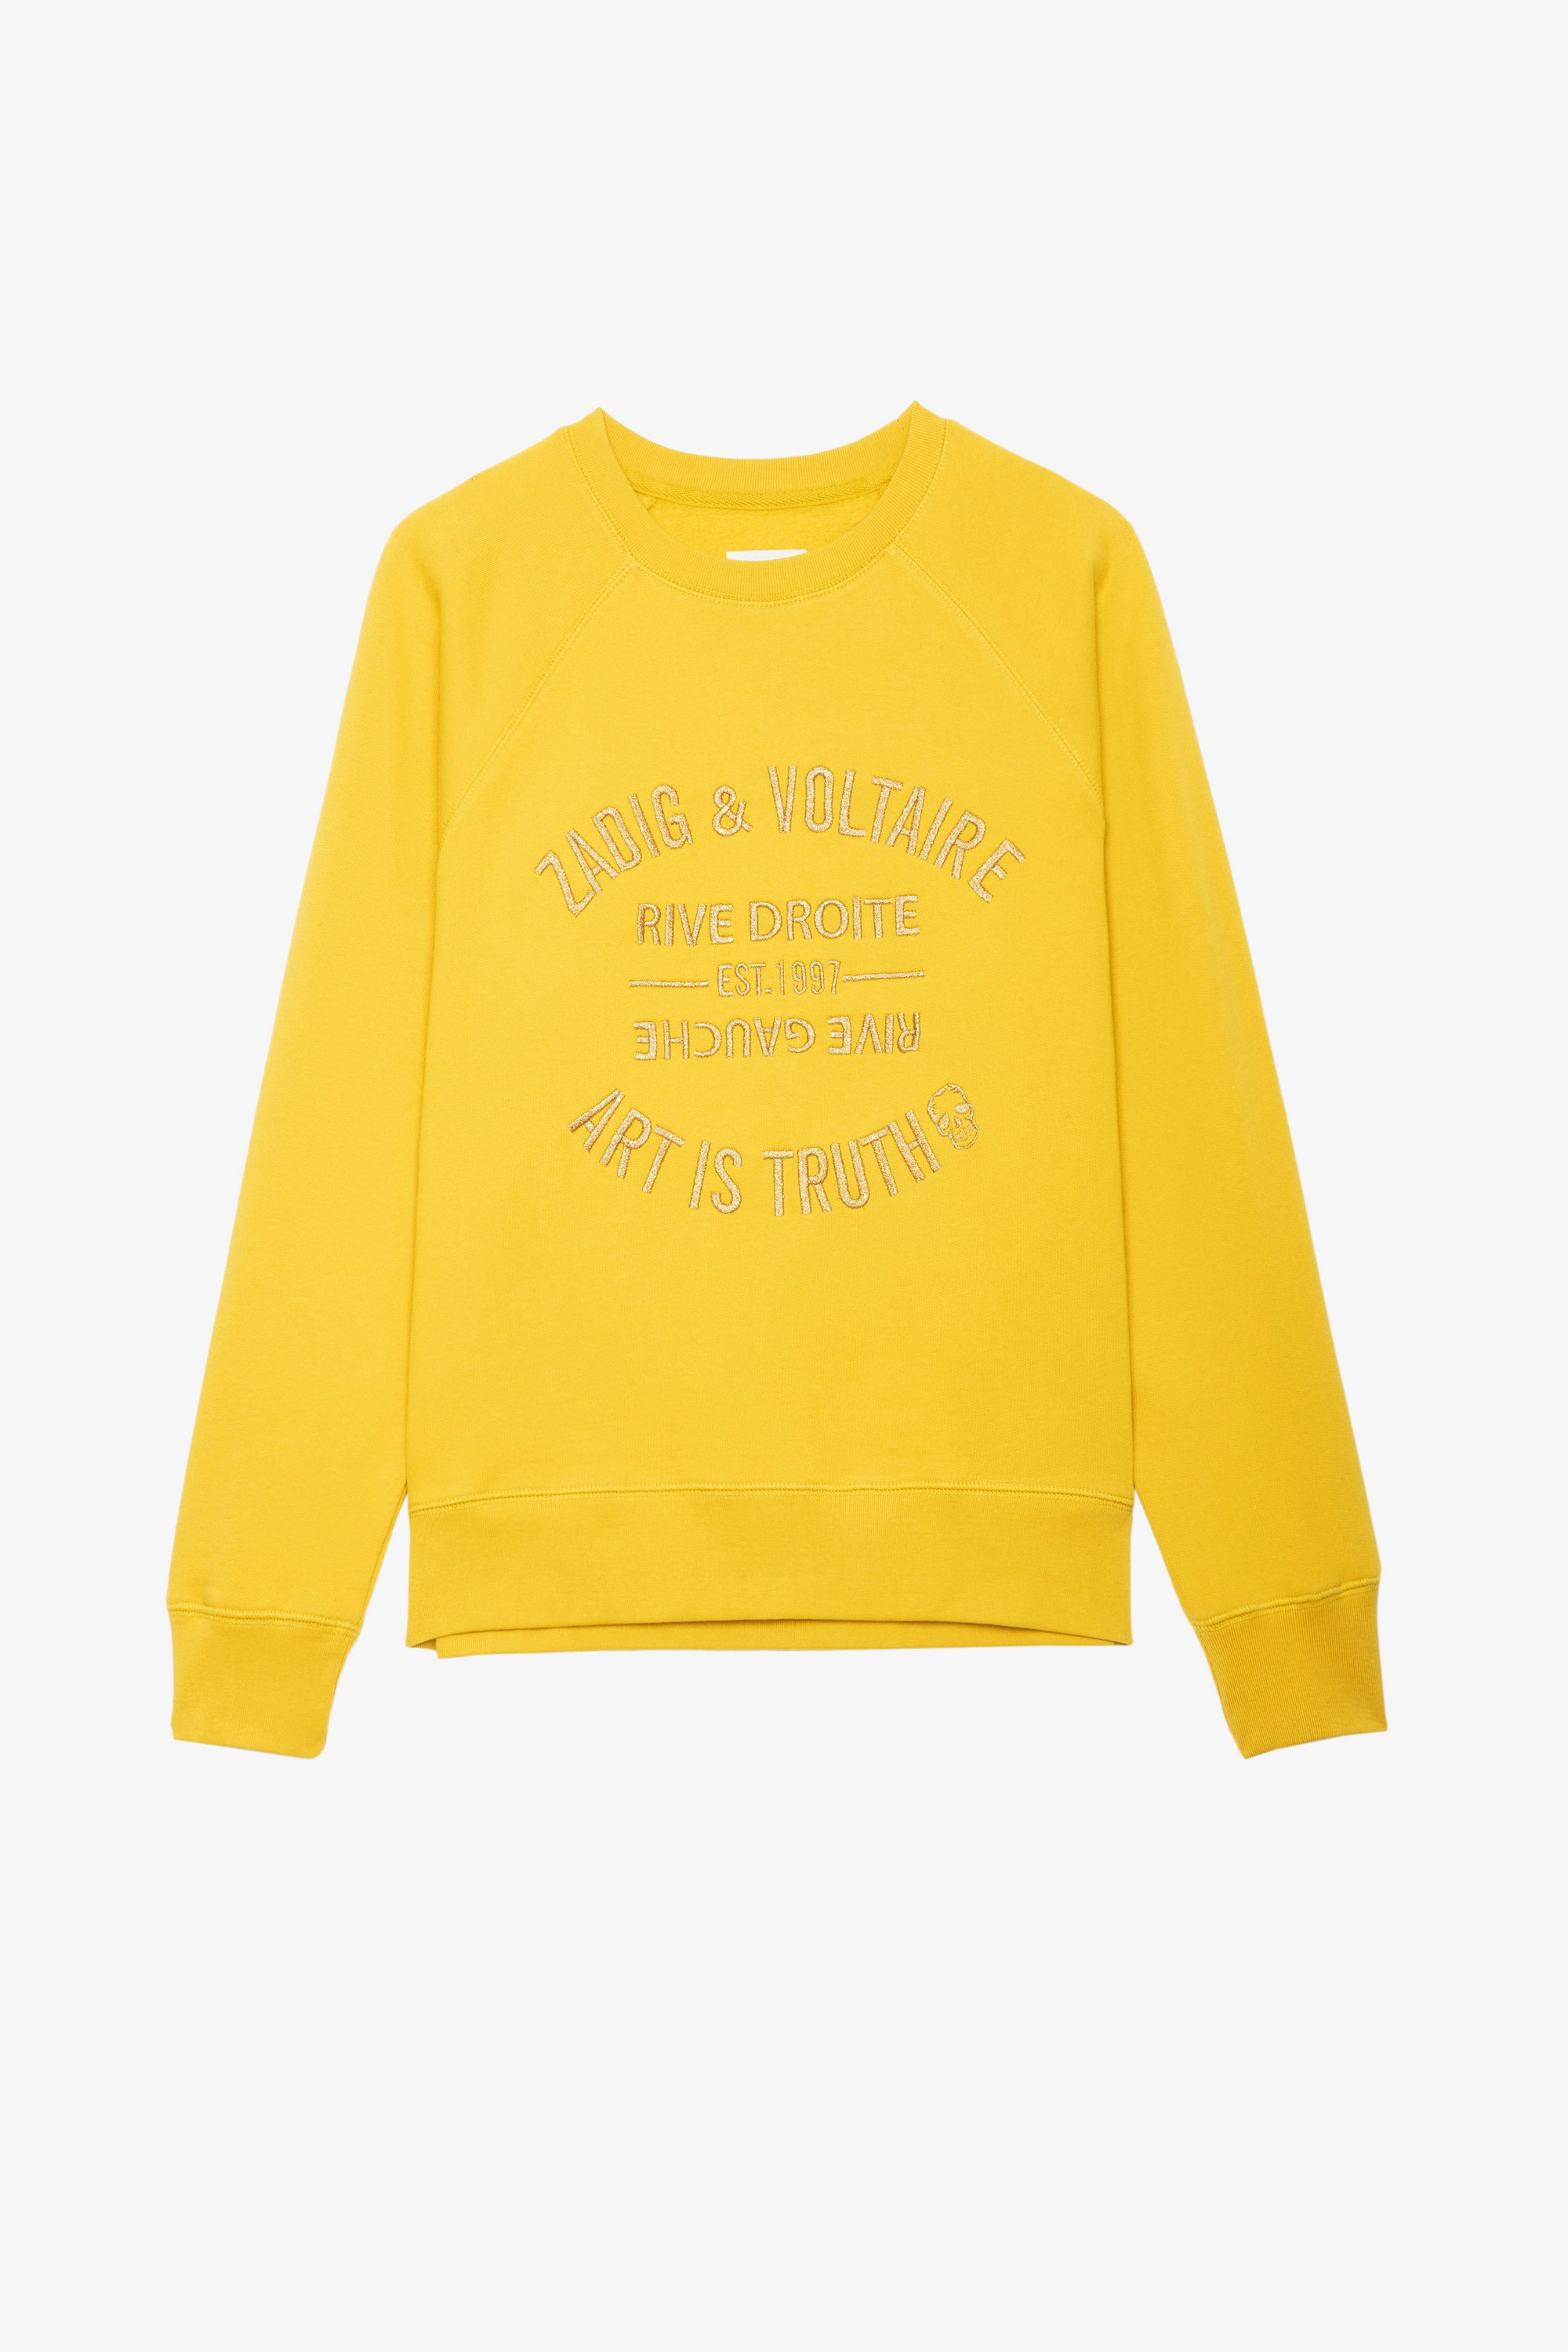 Upper Blason Embroidered スウェット Women’s yellow cotton sweatshirt with badge embroidery